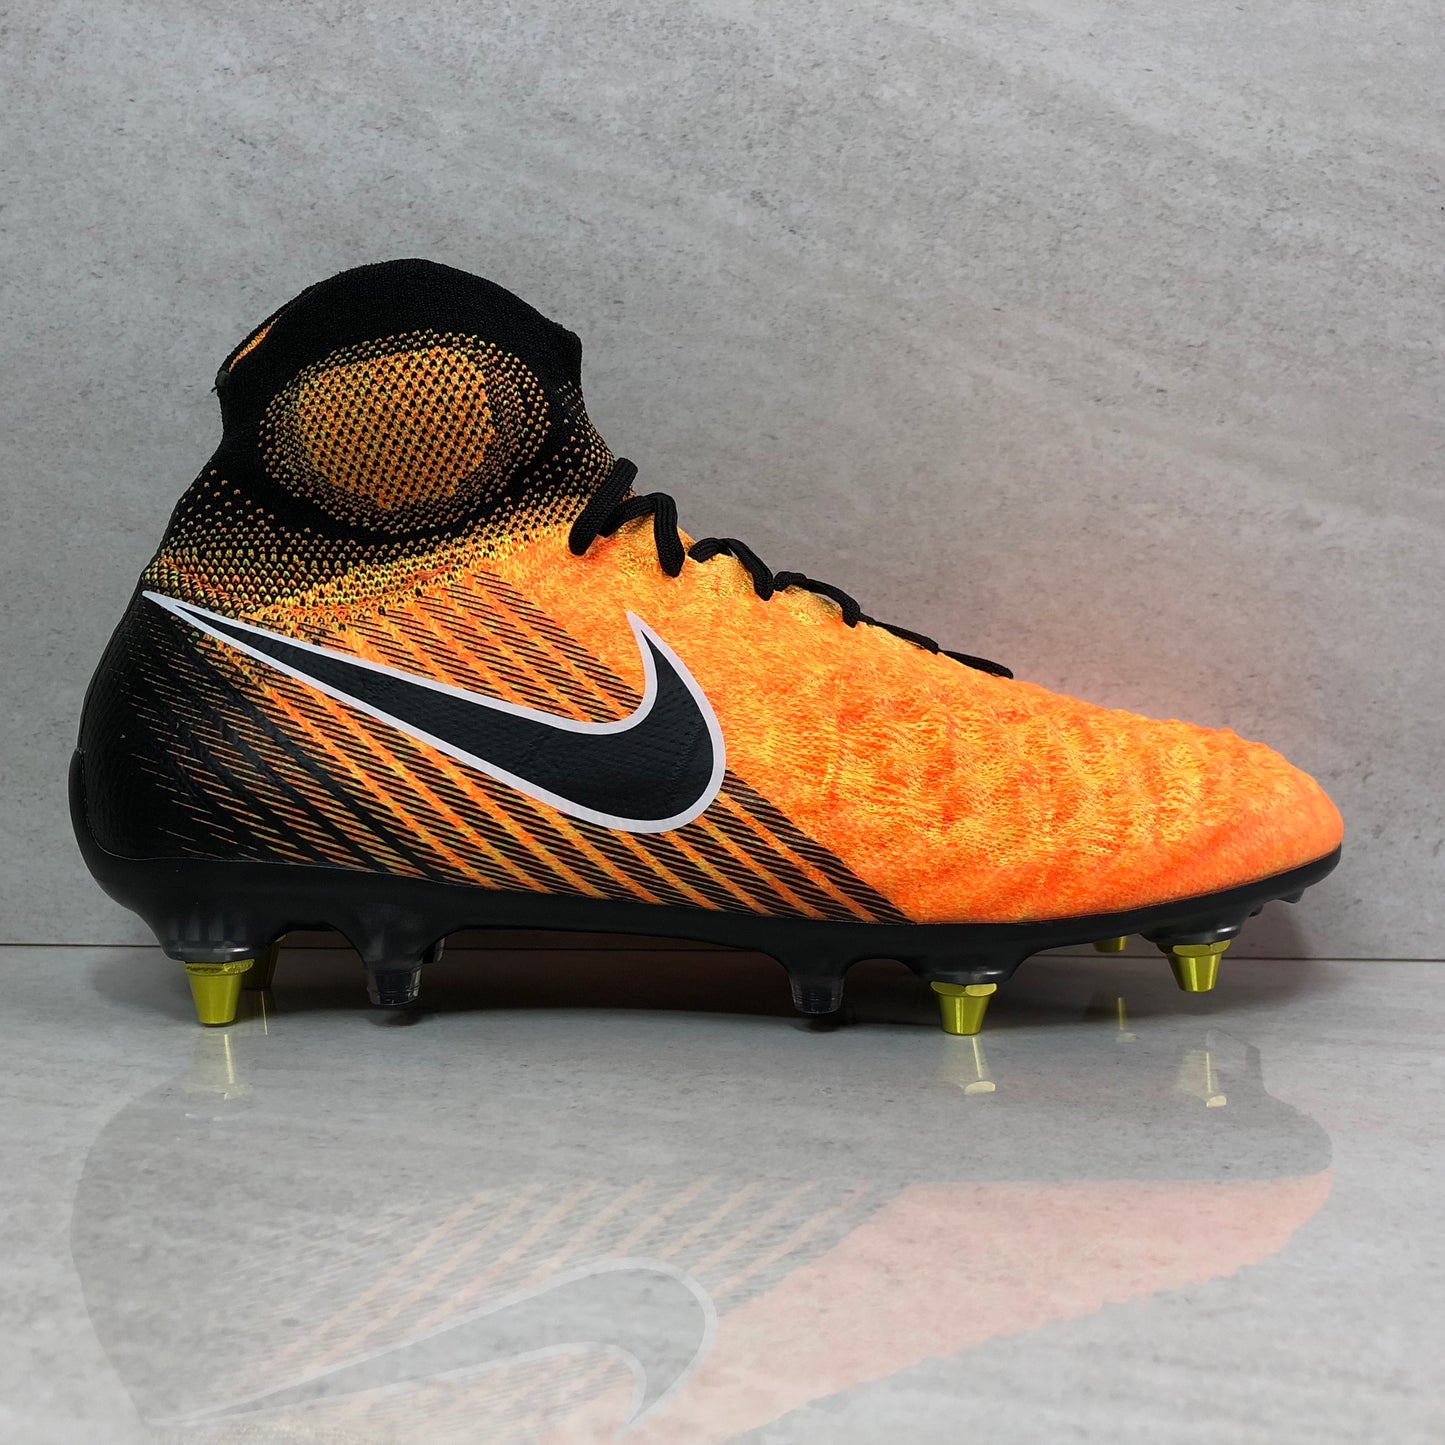 Nike Magista Obra II SG Pro - 869482 802 - Men's Soccer Cleats Size 8/Size 9 Laser Orange Black White